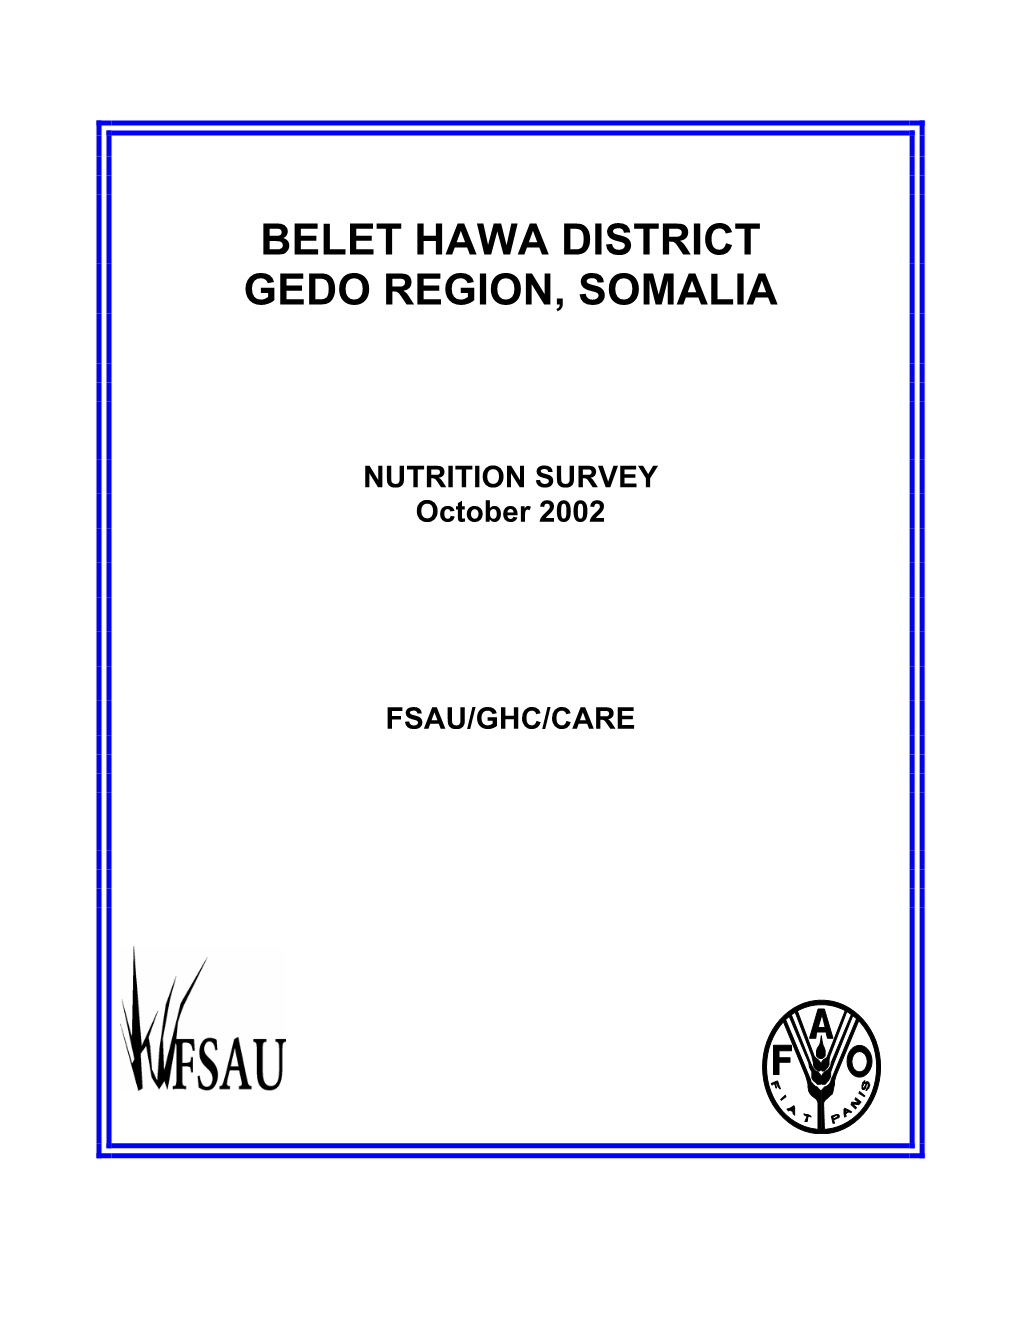 Belet Hawa District Gedo Region, Somalia